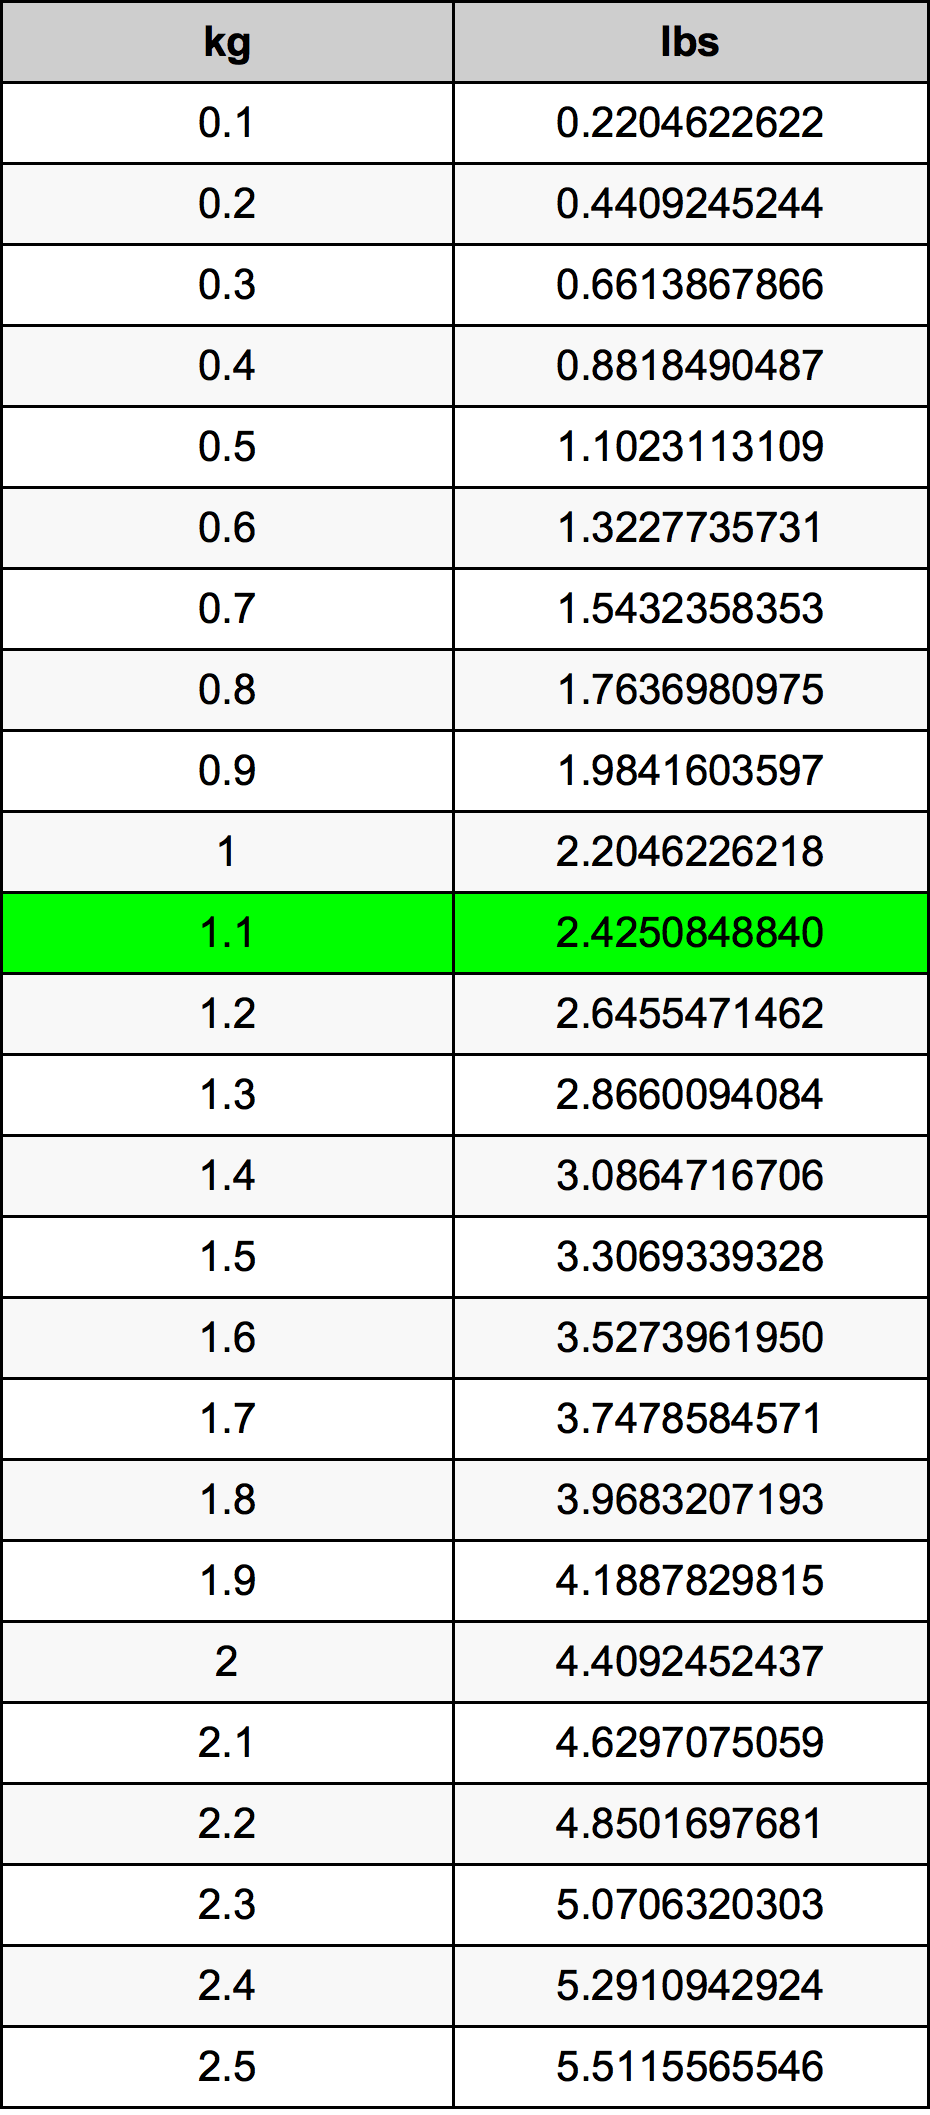 1.1 Kilogramma konverżjoni tabella